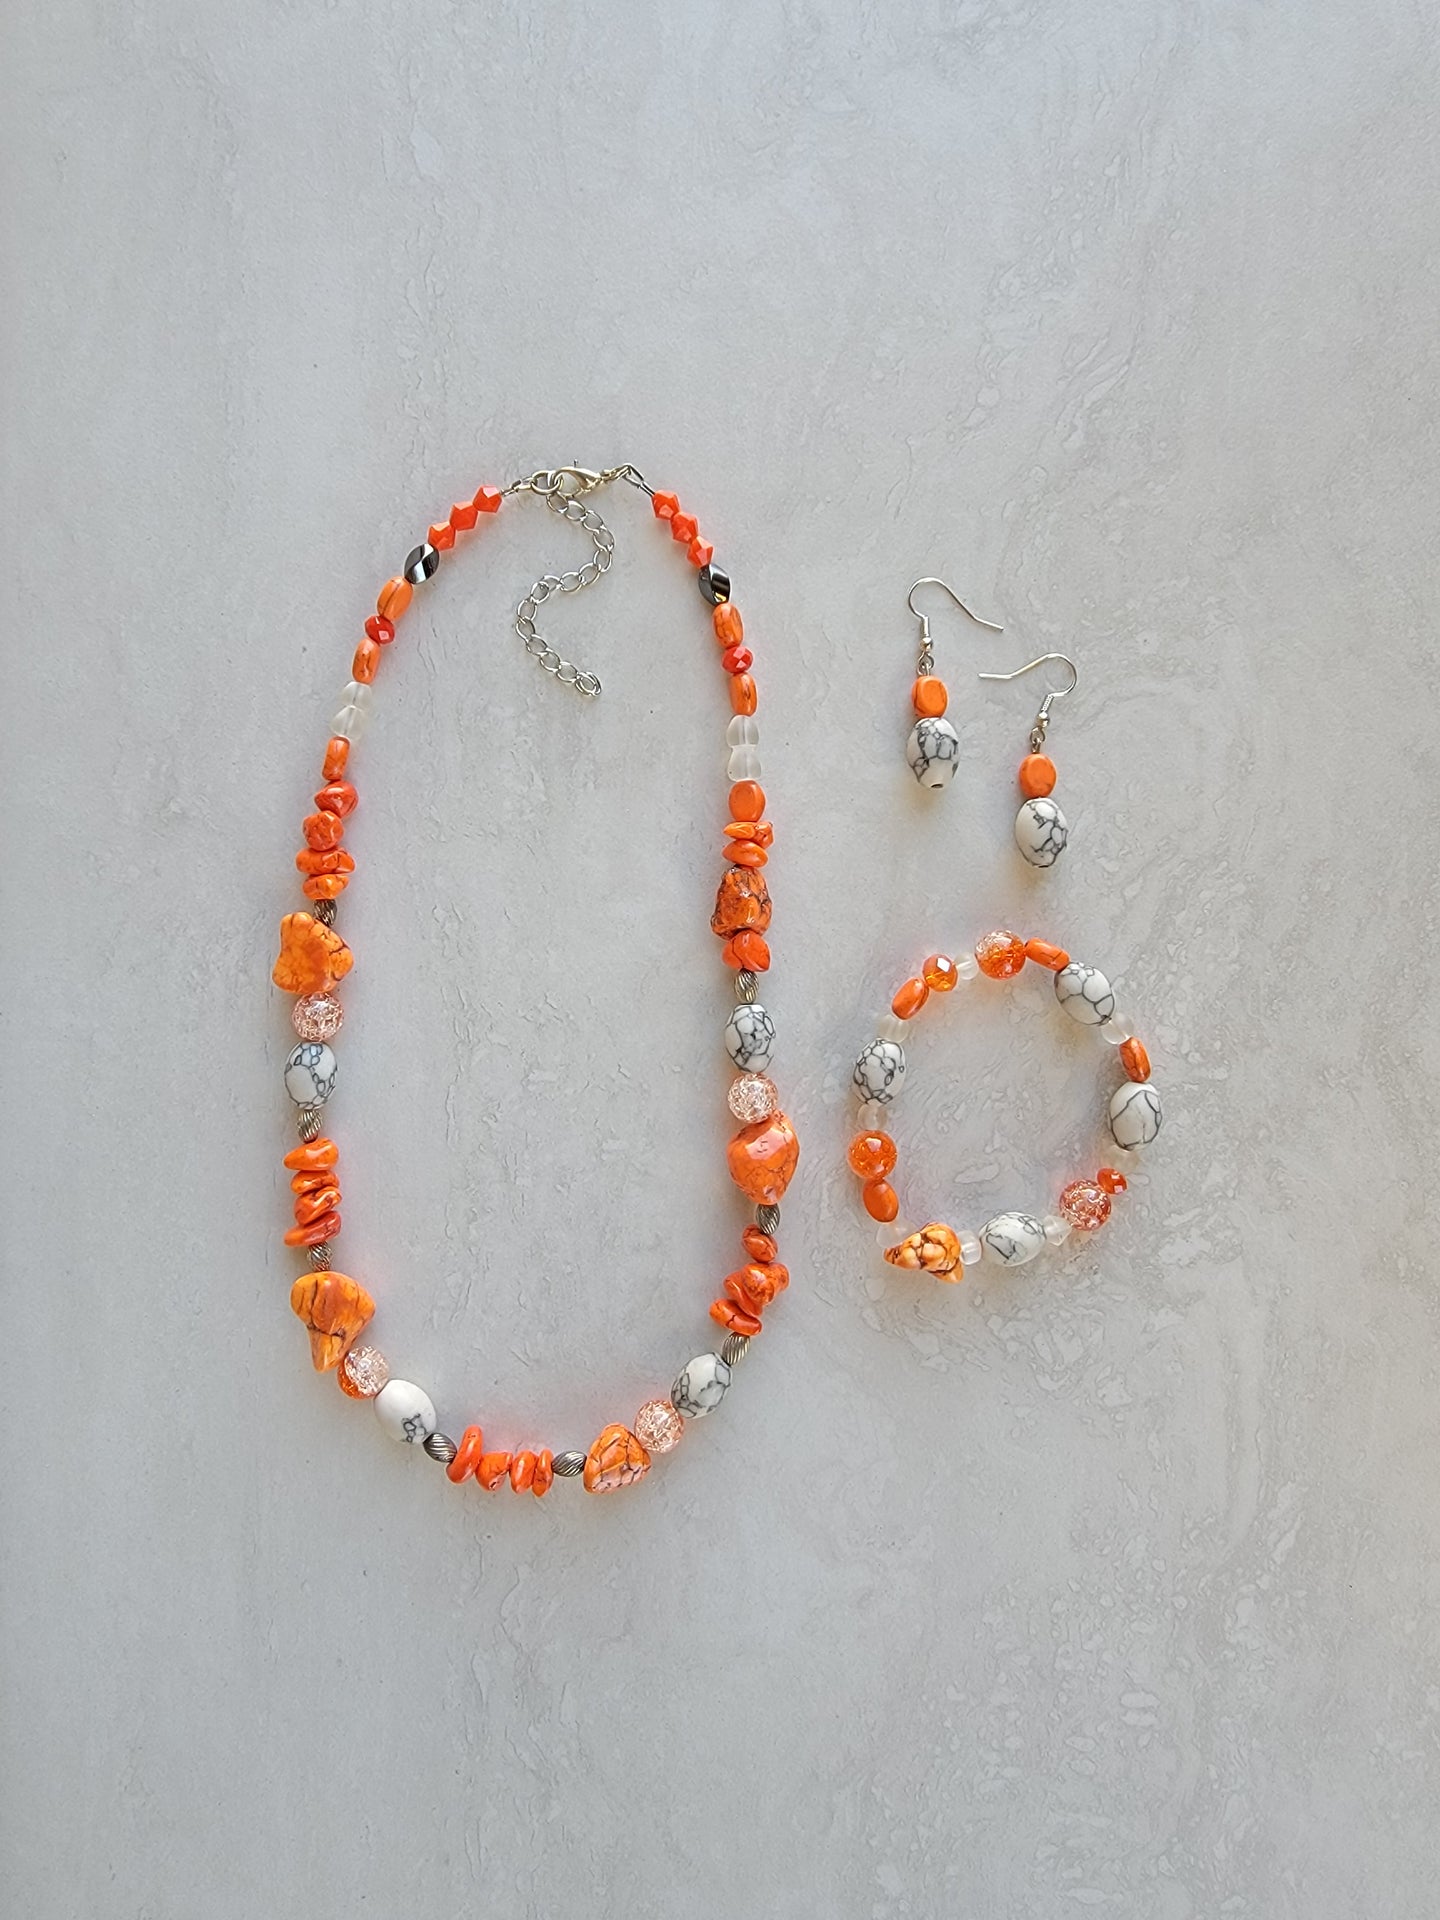 Black And Orange Bakelite Bead Necklace By Hobe